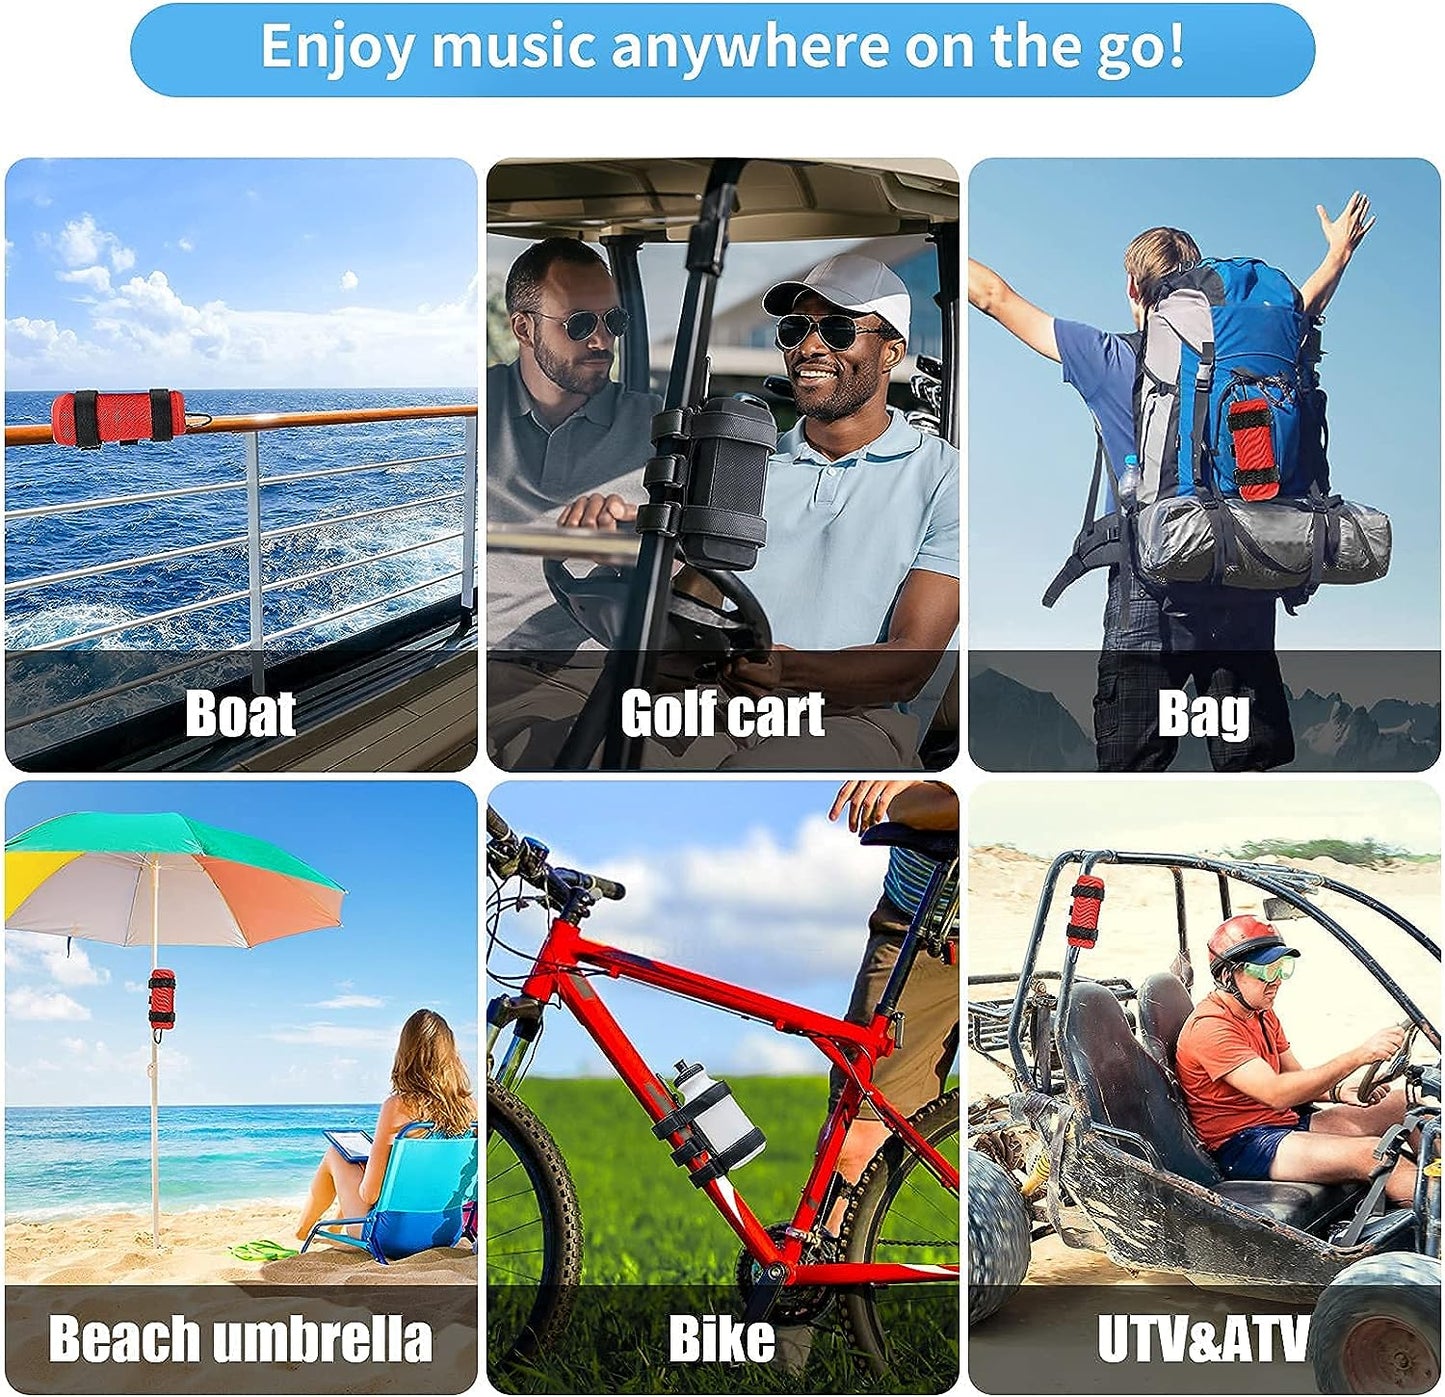 TOOVREN Golf Cart Accessories, Speaker Mount for Golf Cart Bike, Universal Bike Accessories Water Bottle Holder for Bike, Speaker/Bottle Holder Strap Compatible with Golf Cart, Bike, Bicycle, Boat,UTV